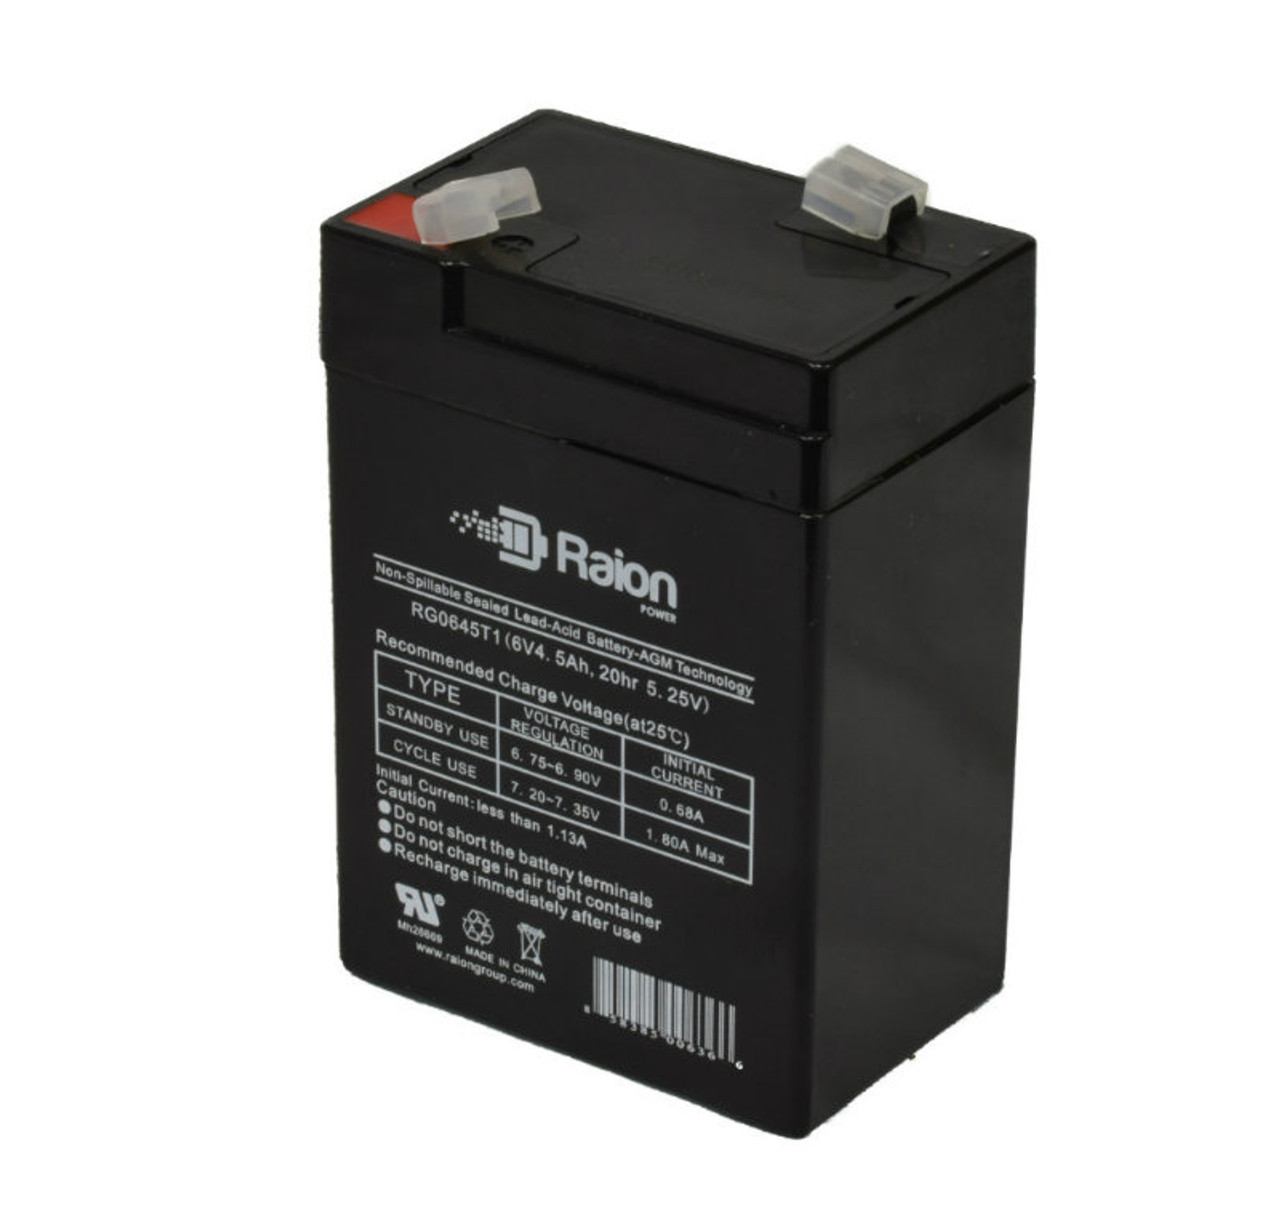 Raion Power RG0645T1 6V 4.5Ah Replacement Battery Cartridge for SBB 3FM4